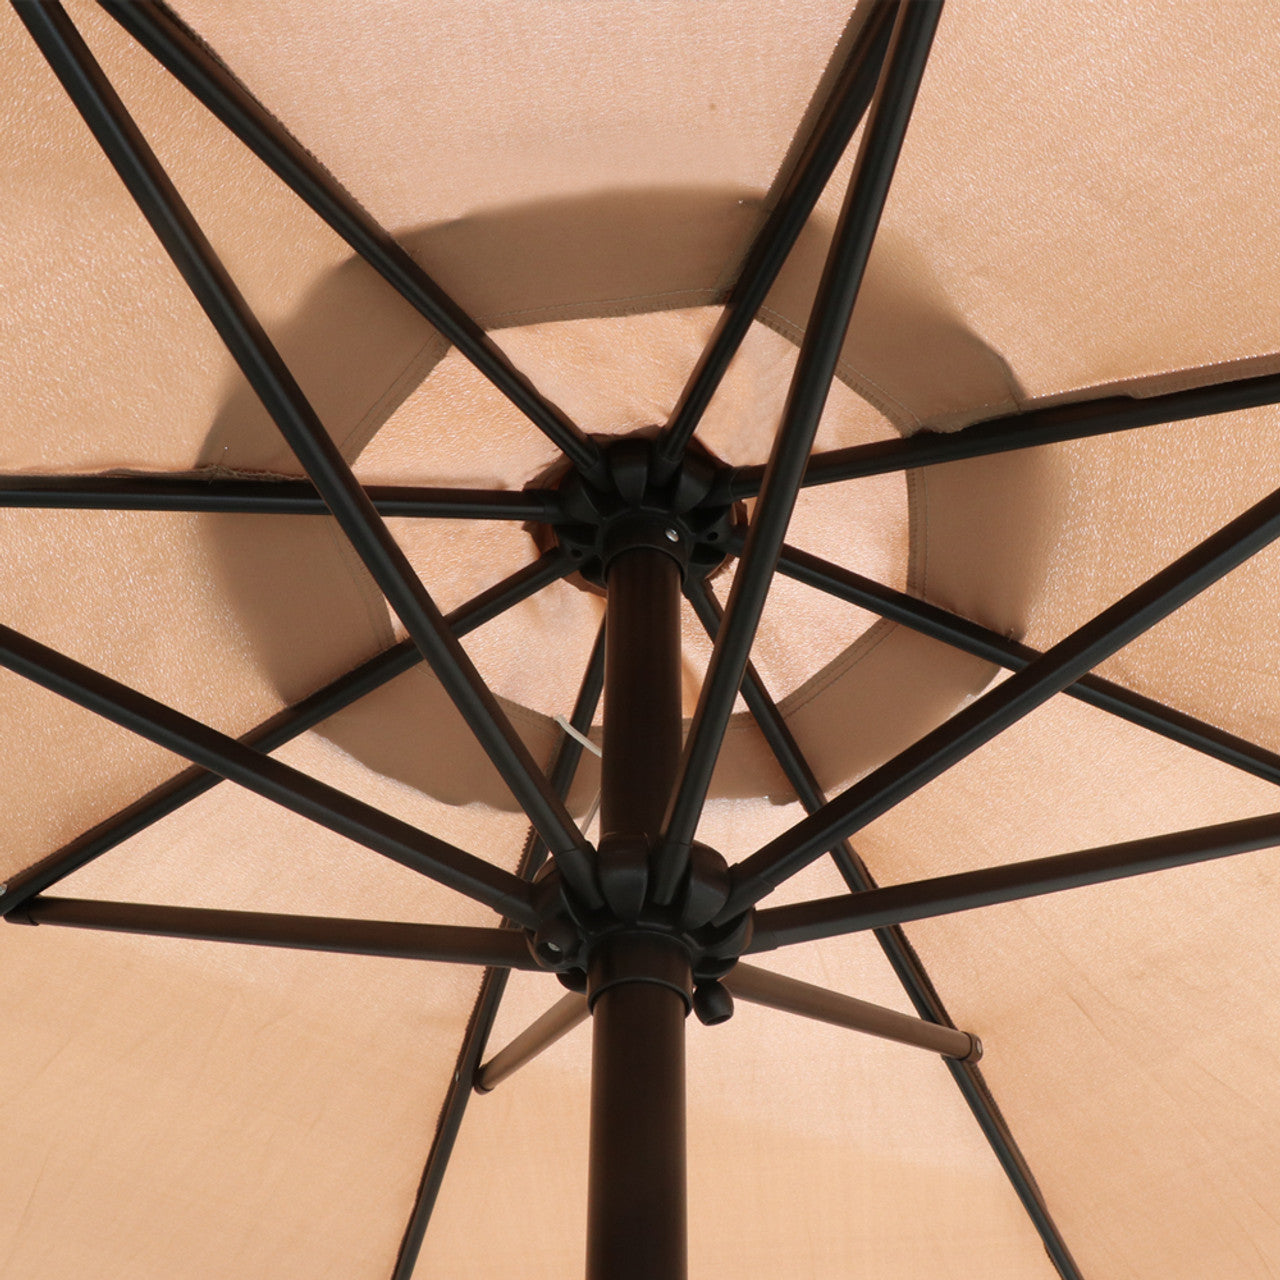 KAHOO 9FT Table Umbrella 1.5 Diameter Pole Outdoor Garden Patio Adjustable Crank Easy Ratcheting Folding 8 Ribs Tan